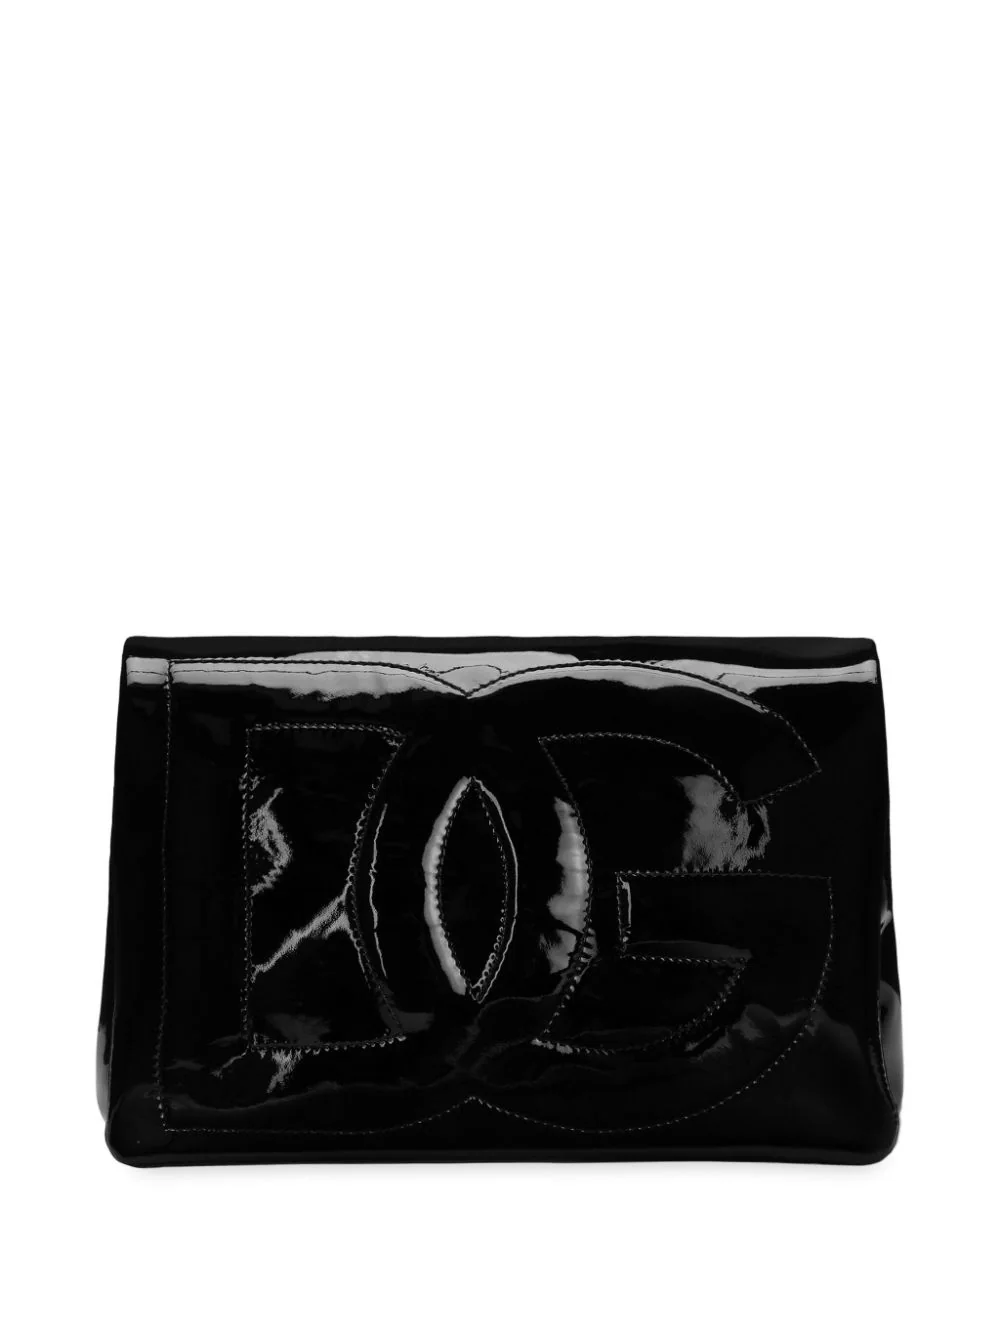 Dolce & Gabbana Dg Soft Bag In Black